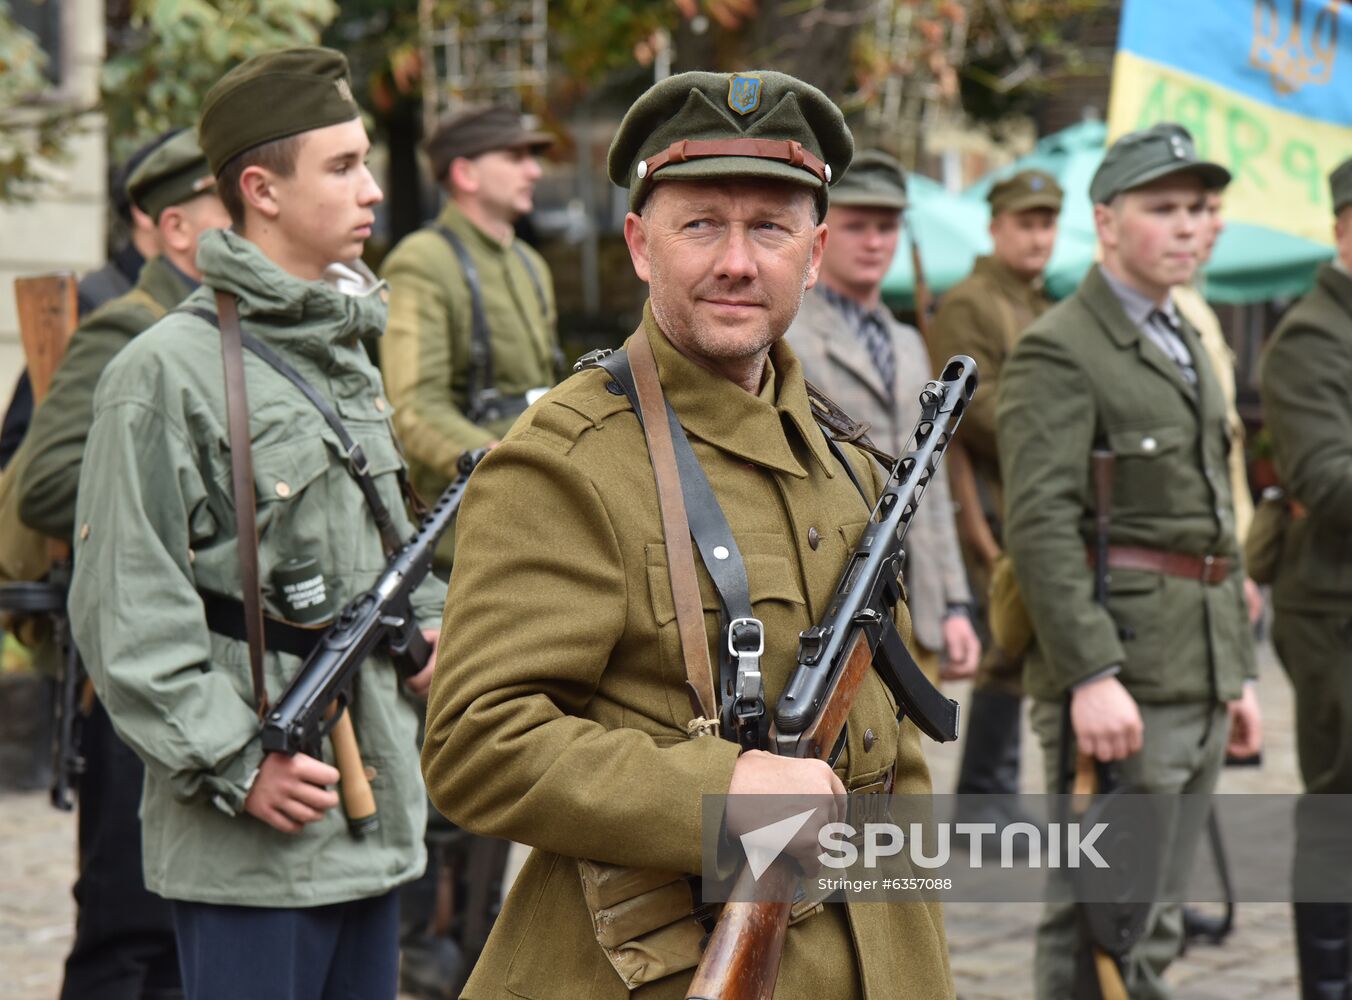 Ukraine WWII Insurgent Army Anniversary